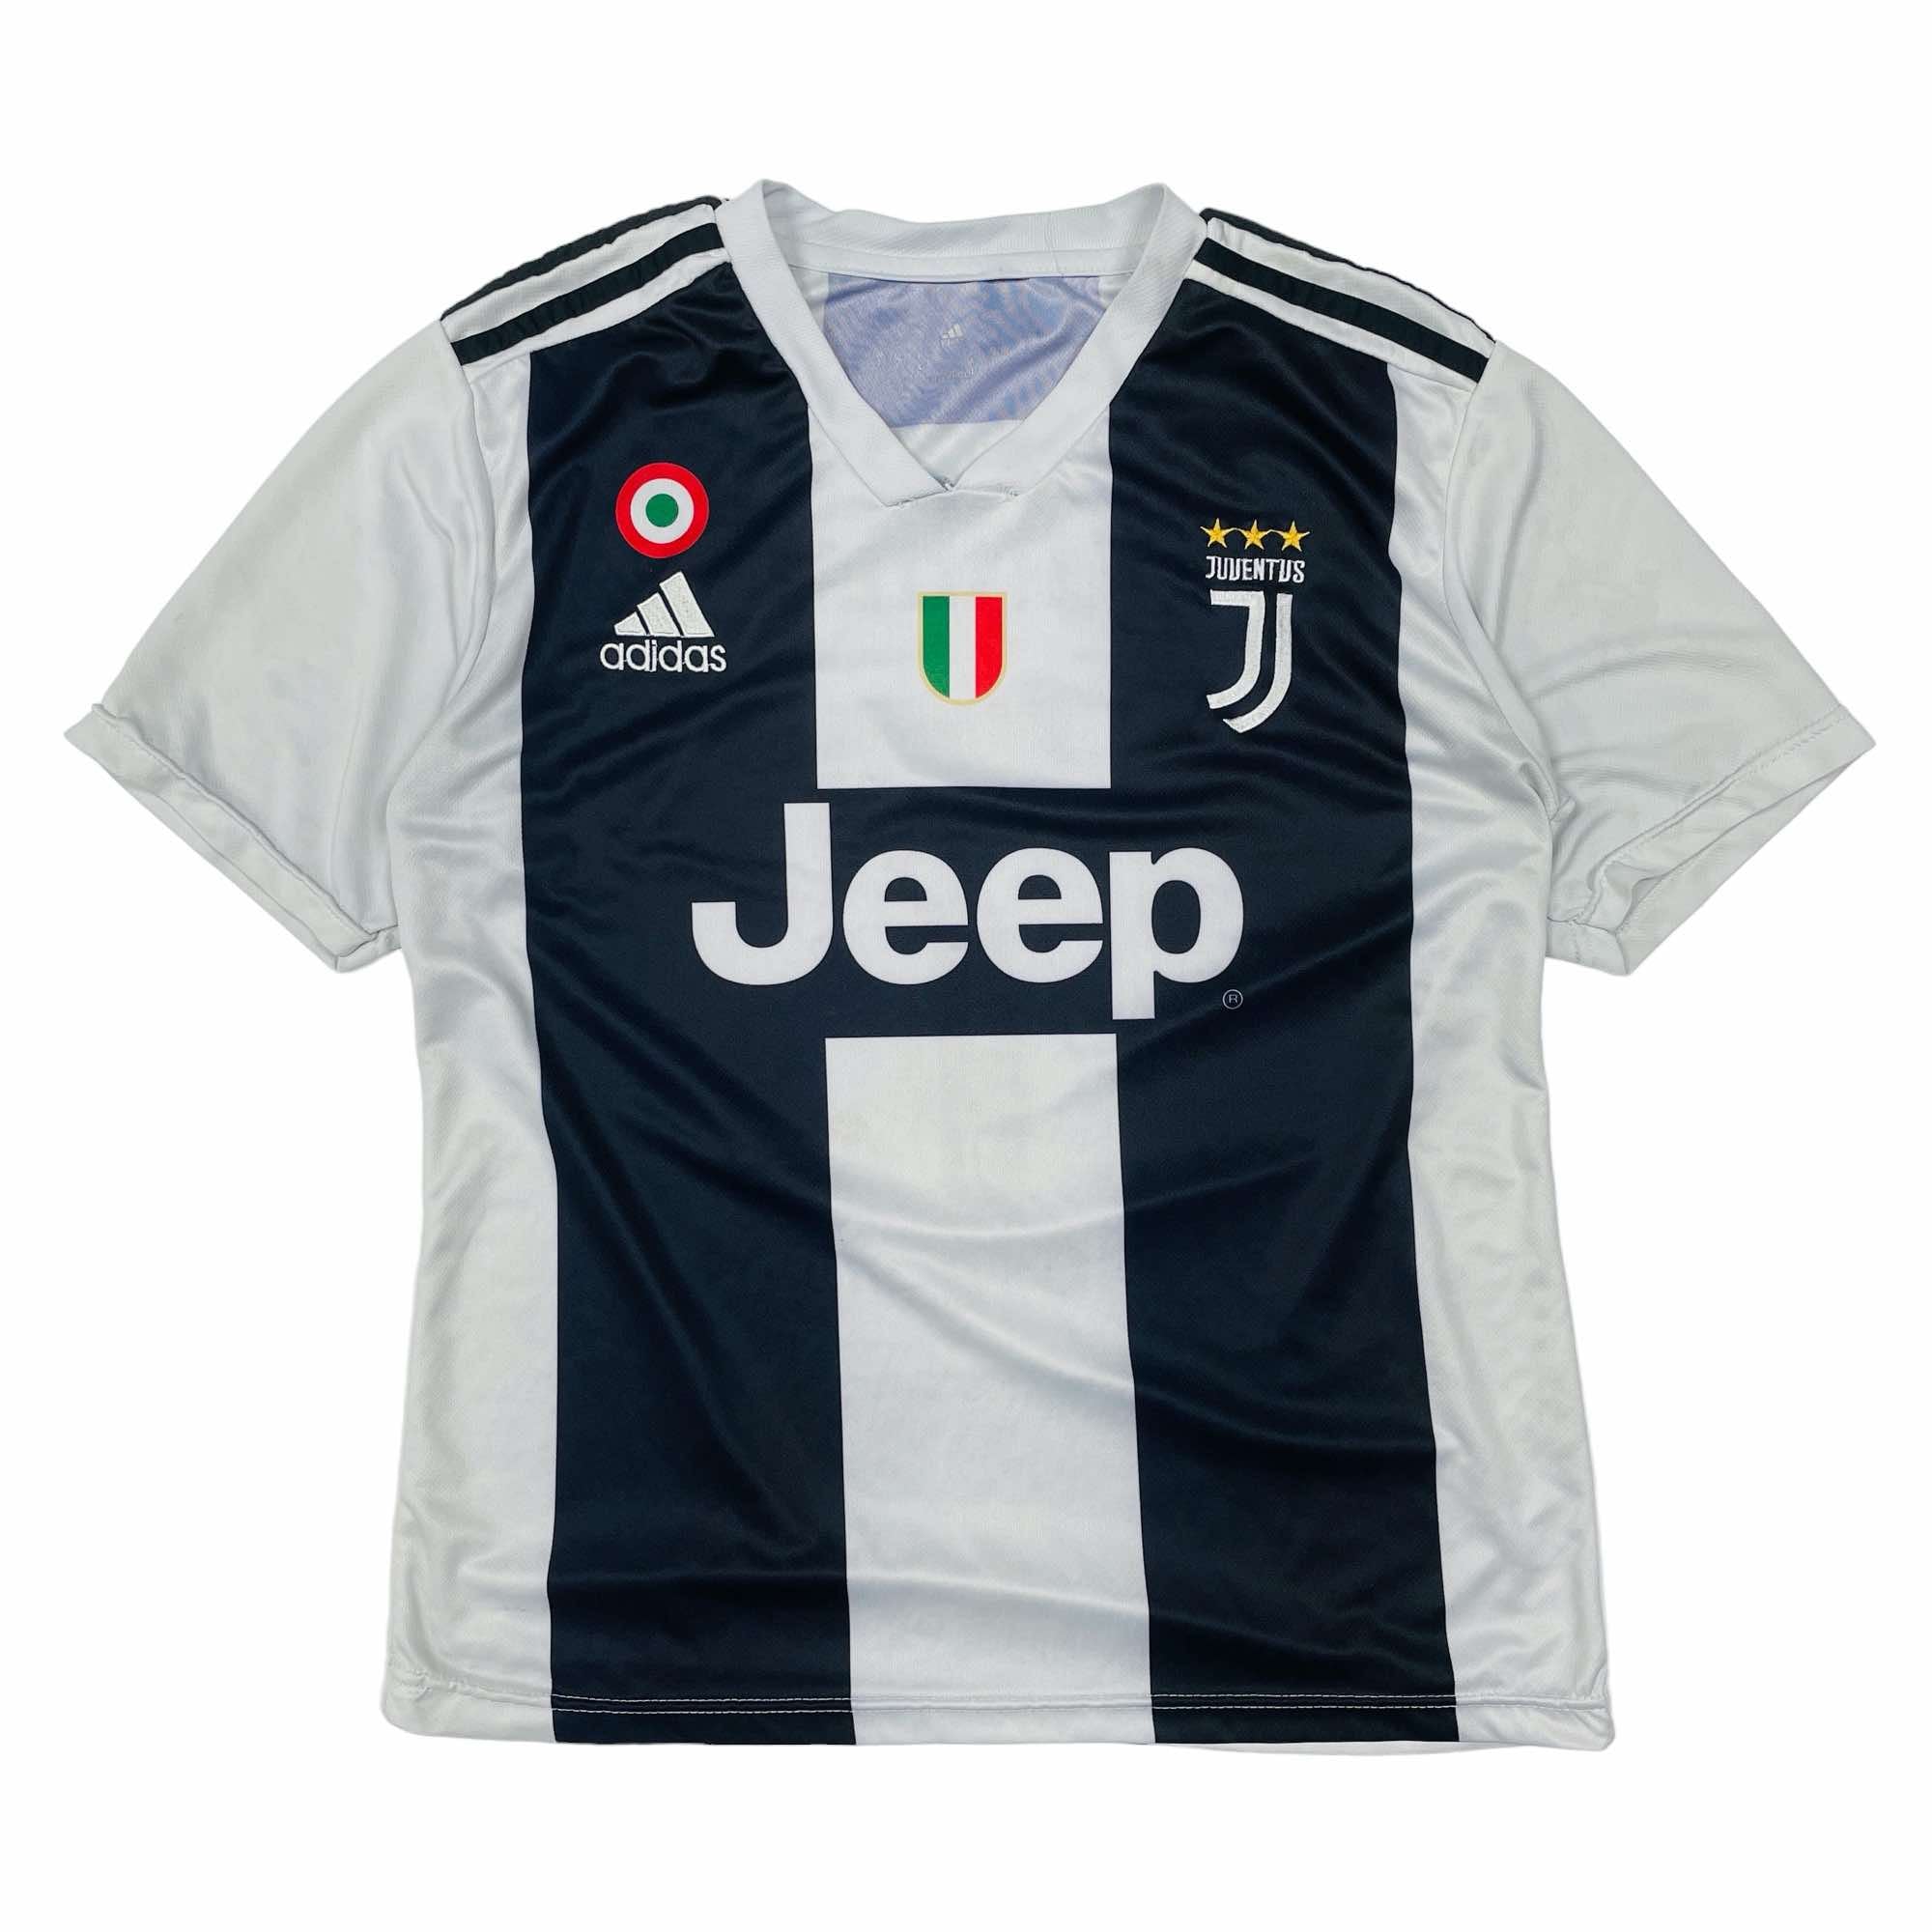 Juventus 2018/19 Adidas Cristiano Ronaldo Shirt - Large